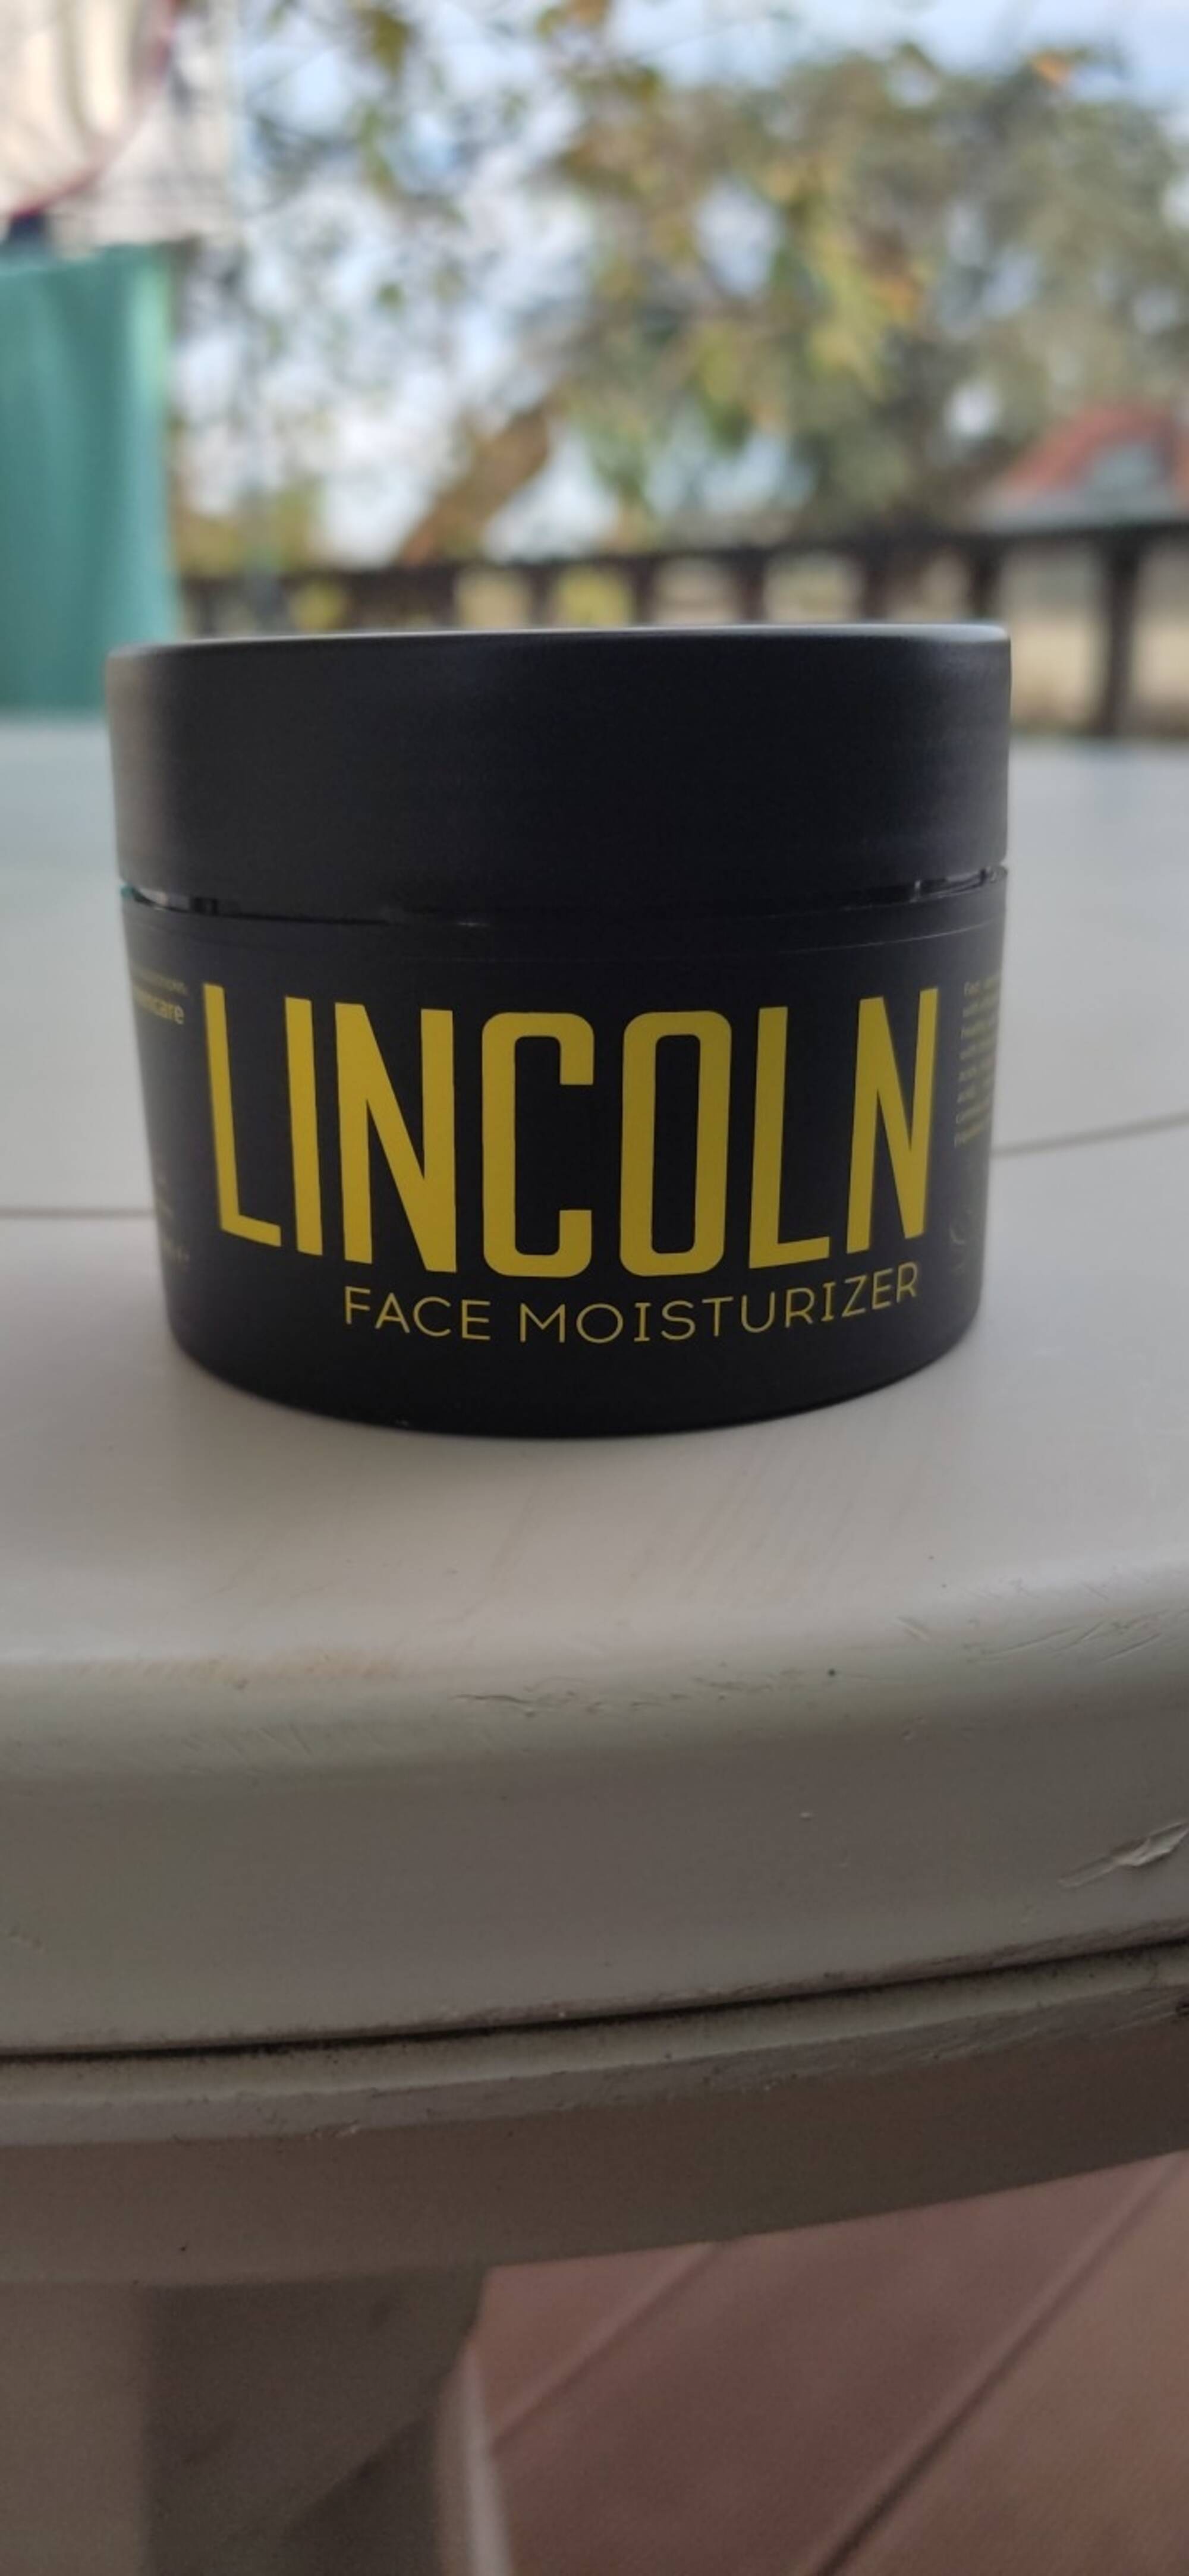 LINCOLN - Face moisturizer